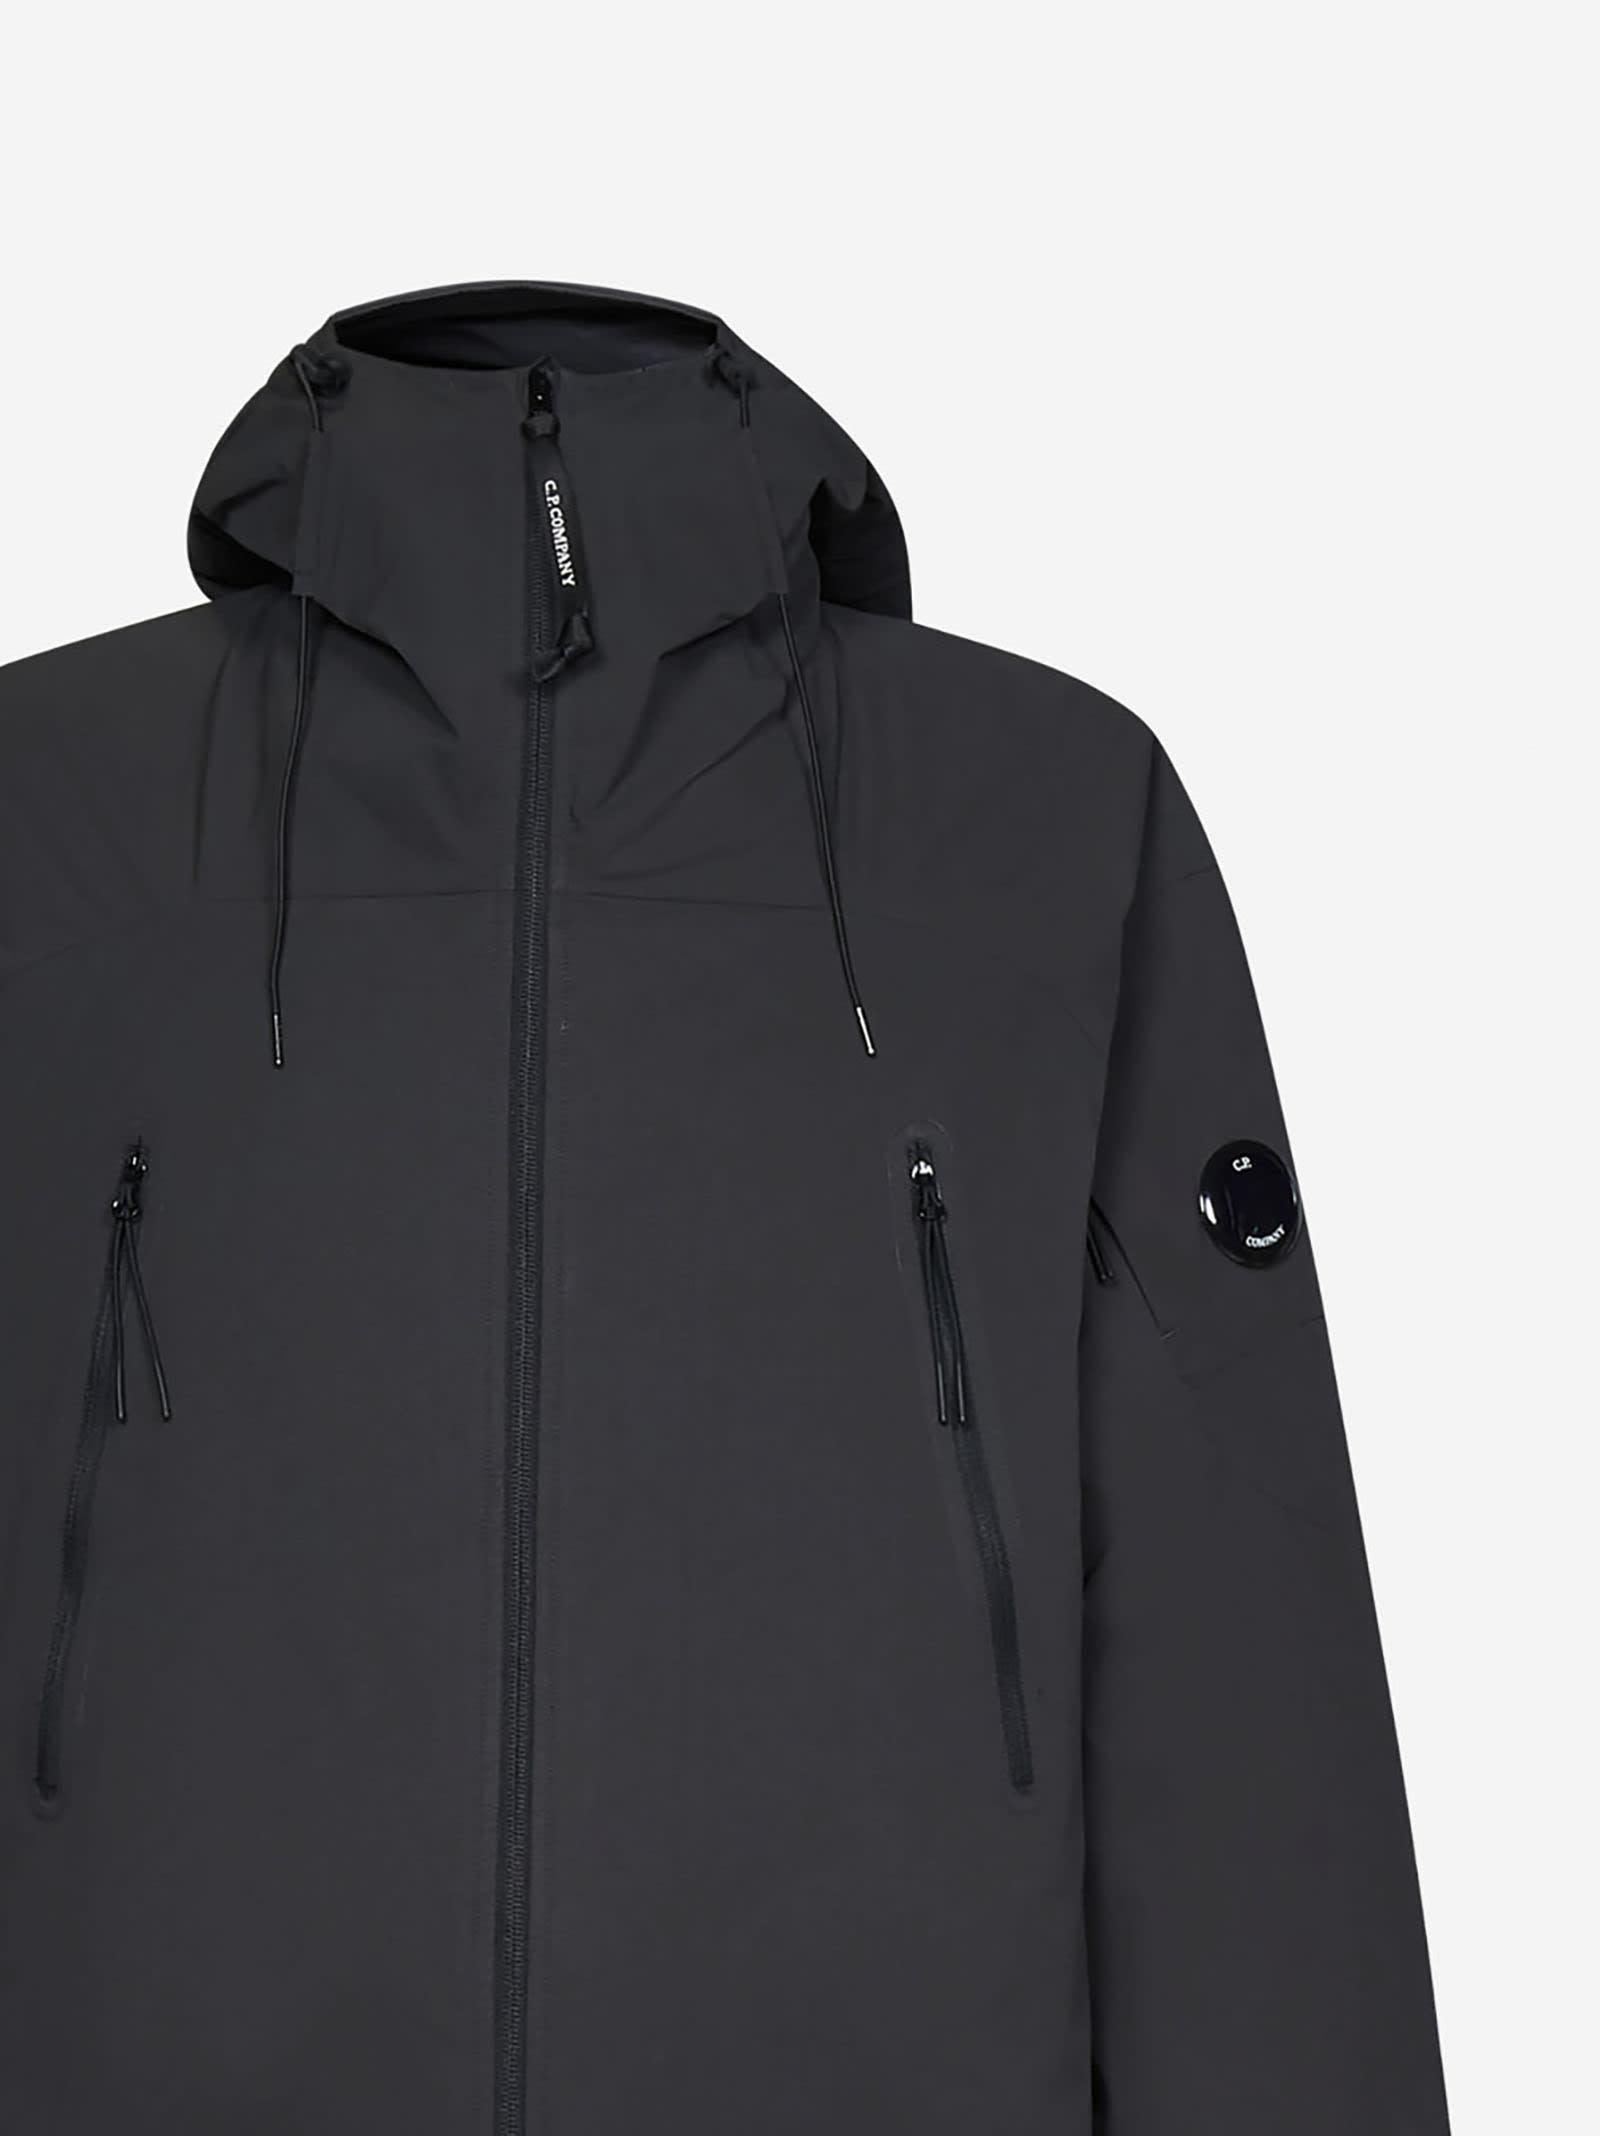 C.P. Company Pro-tek Jacket in Black for Men | Lyst